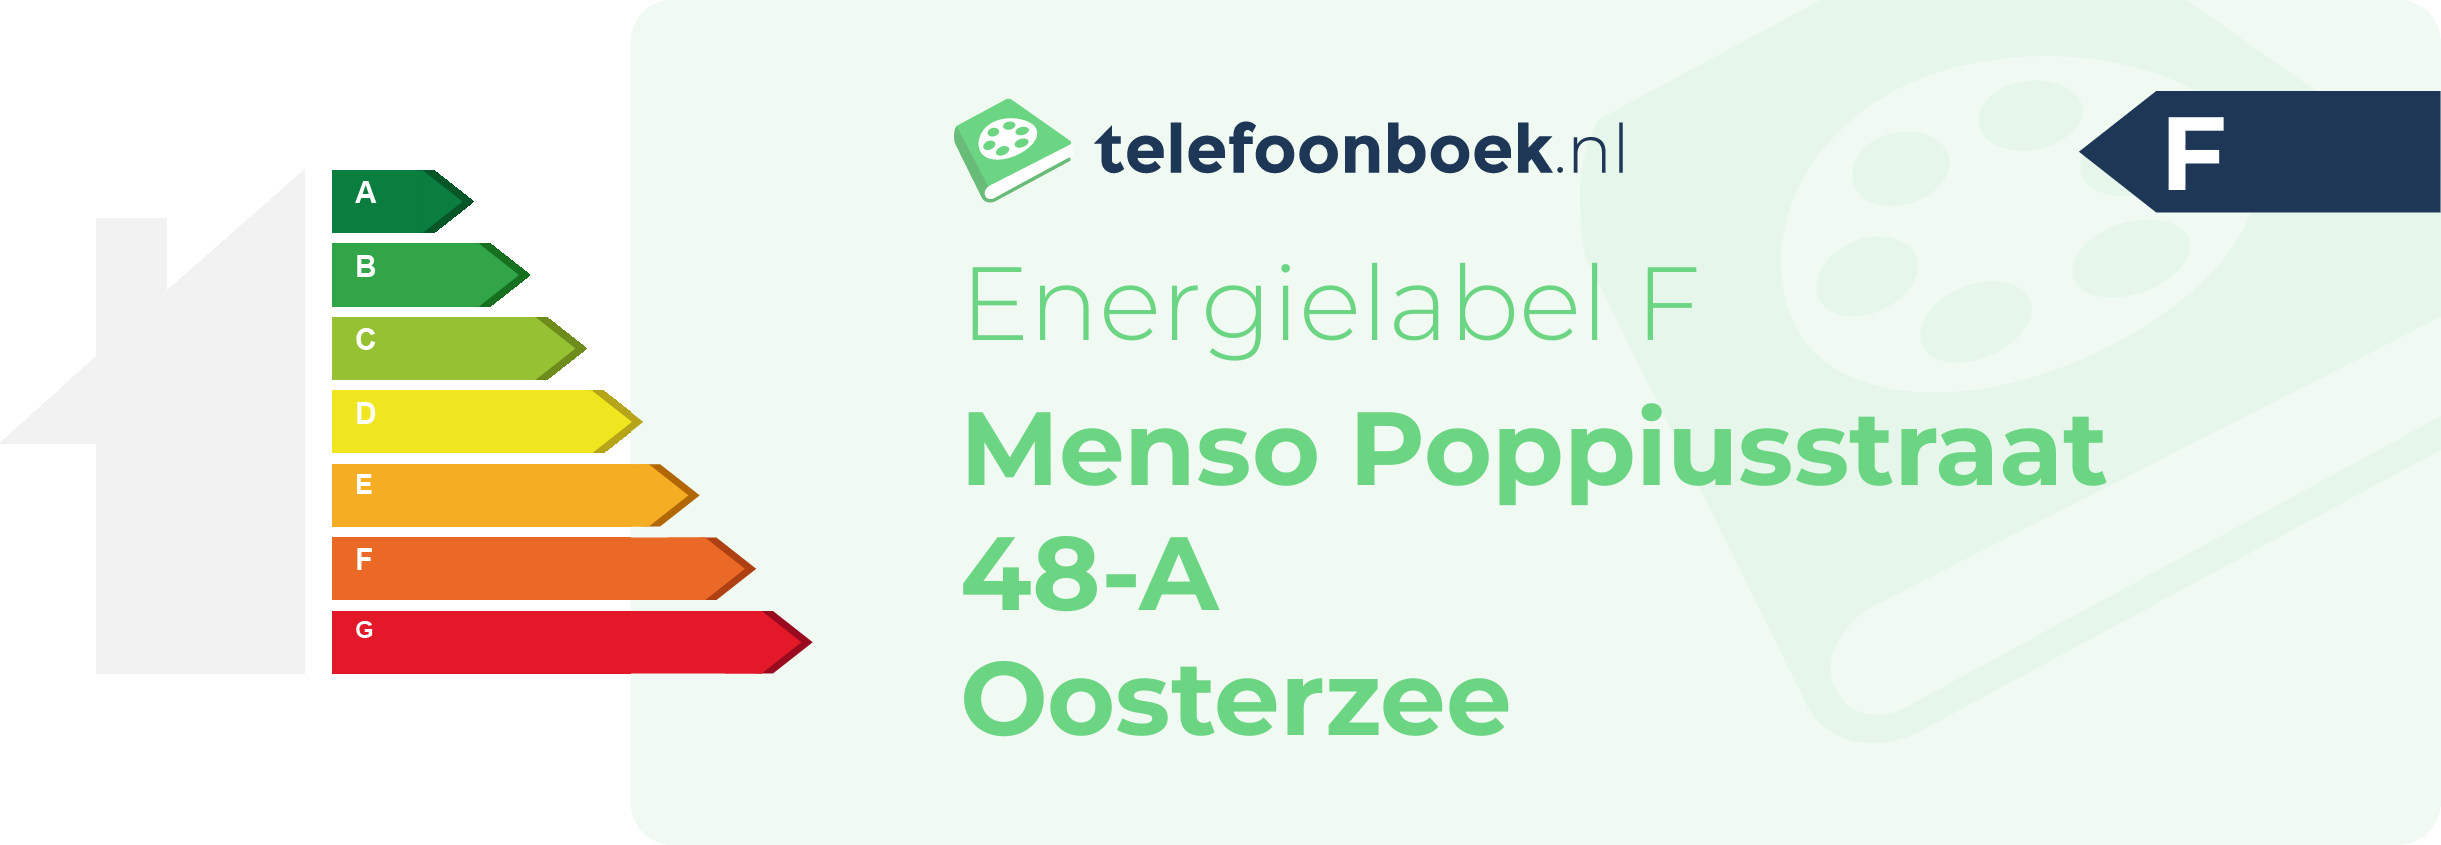 Energielabel Menso Poppiusstraat 48-A Oosterzee